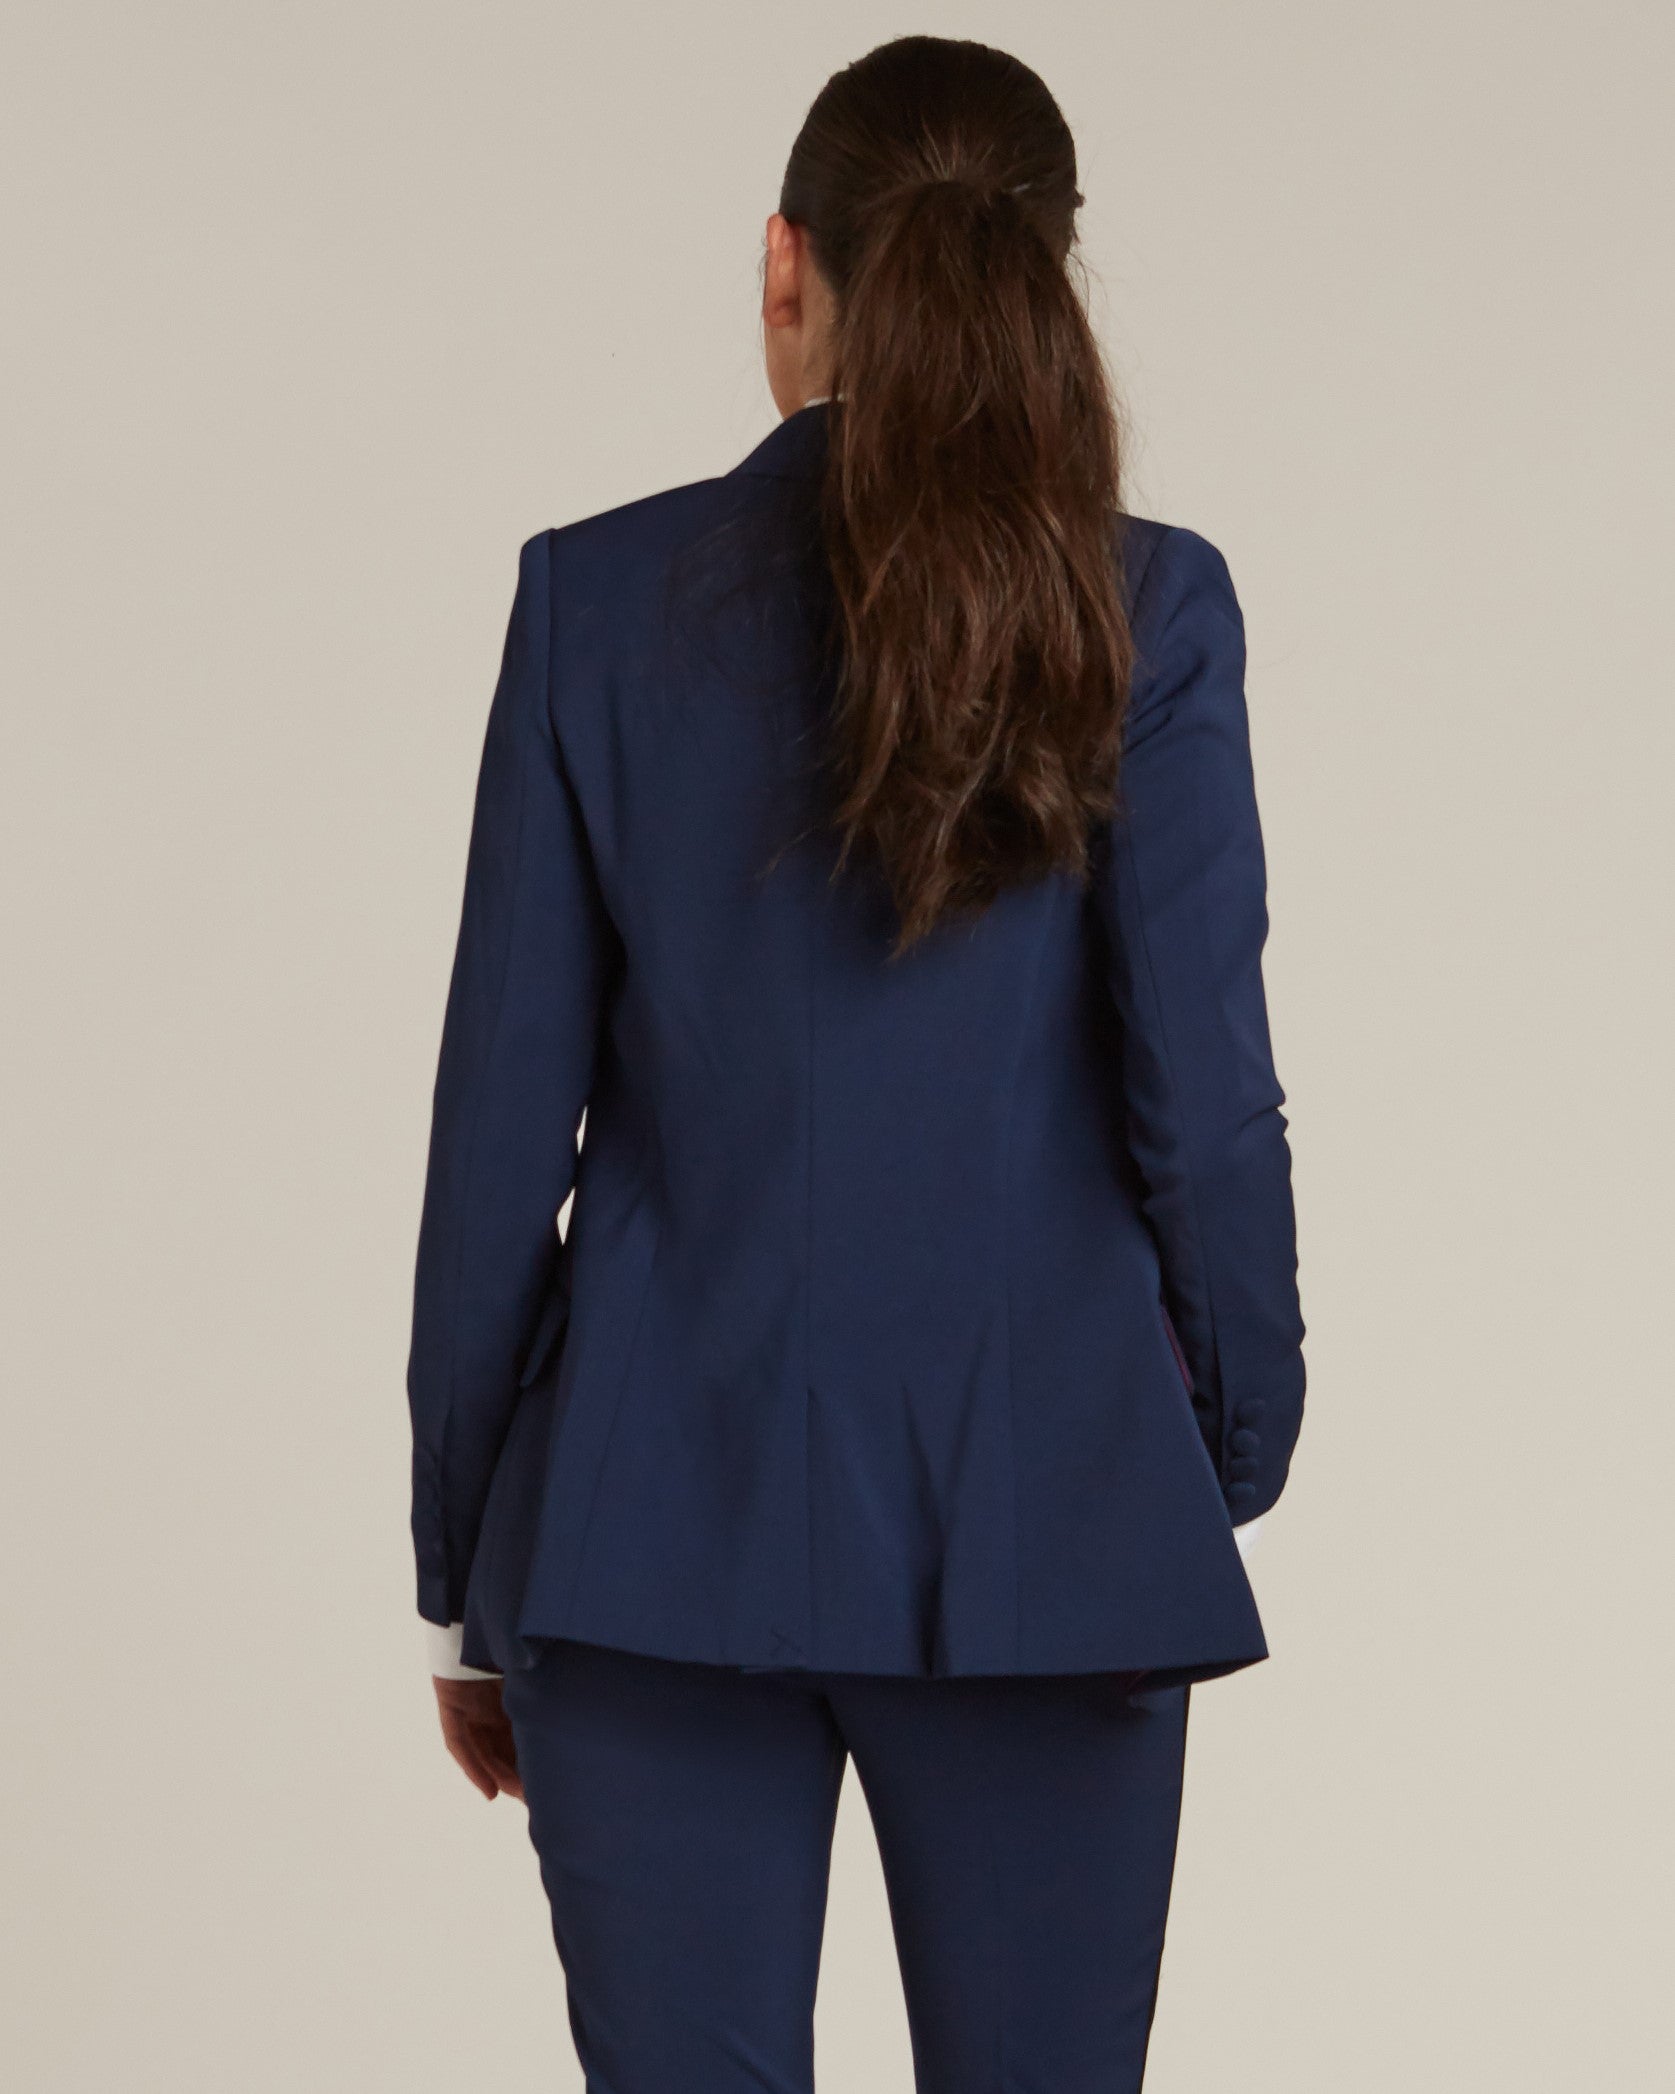 Navy & Black Peak Lapel Tuxedo Jacket - Women’s Tuxedo Suits | girls prom tuxedo | gal tux | Wedding Party, Bridesmaids